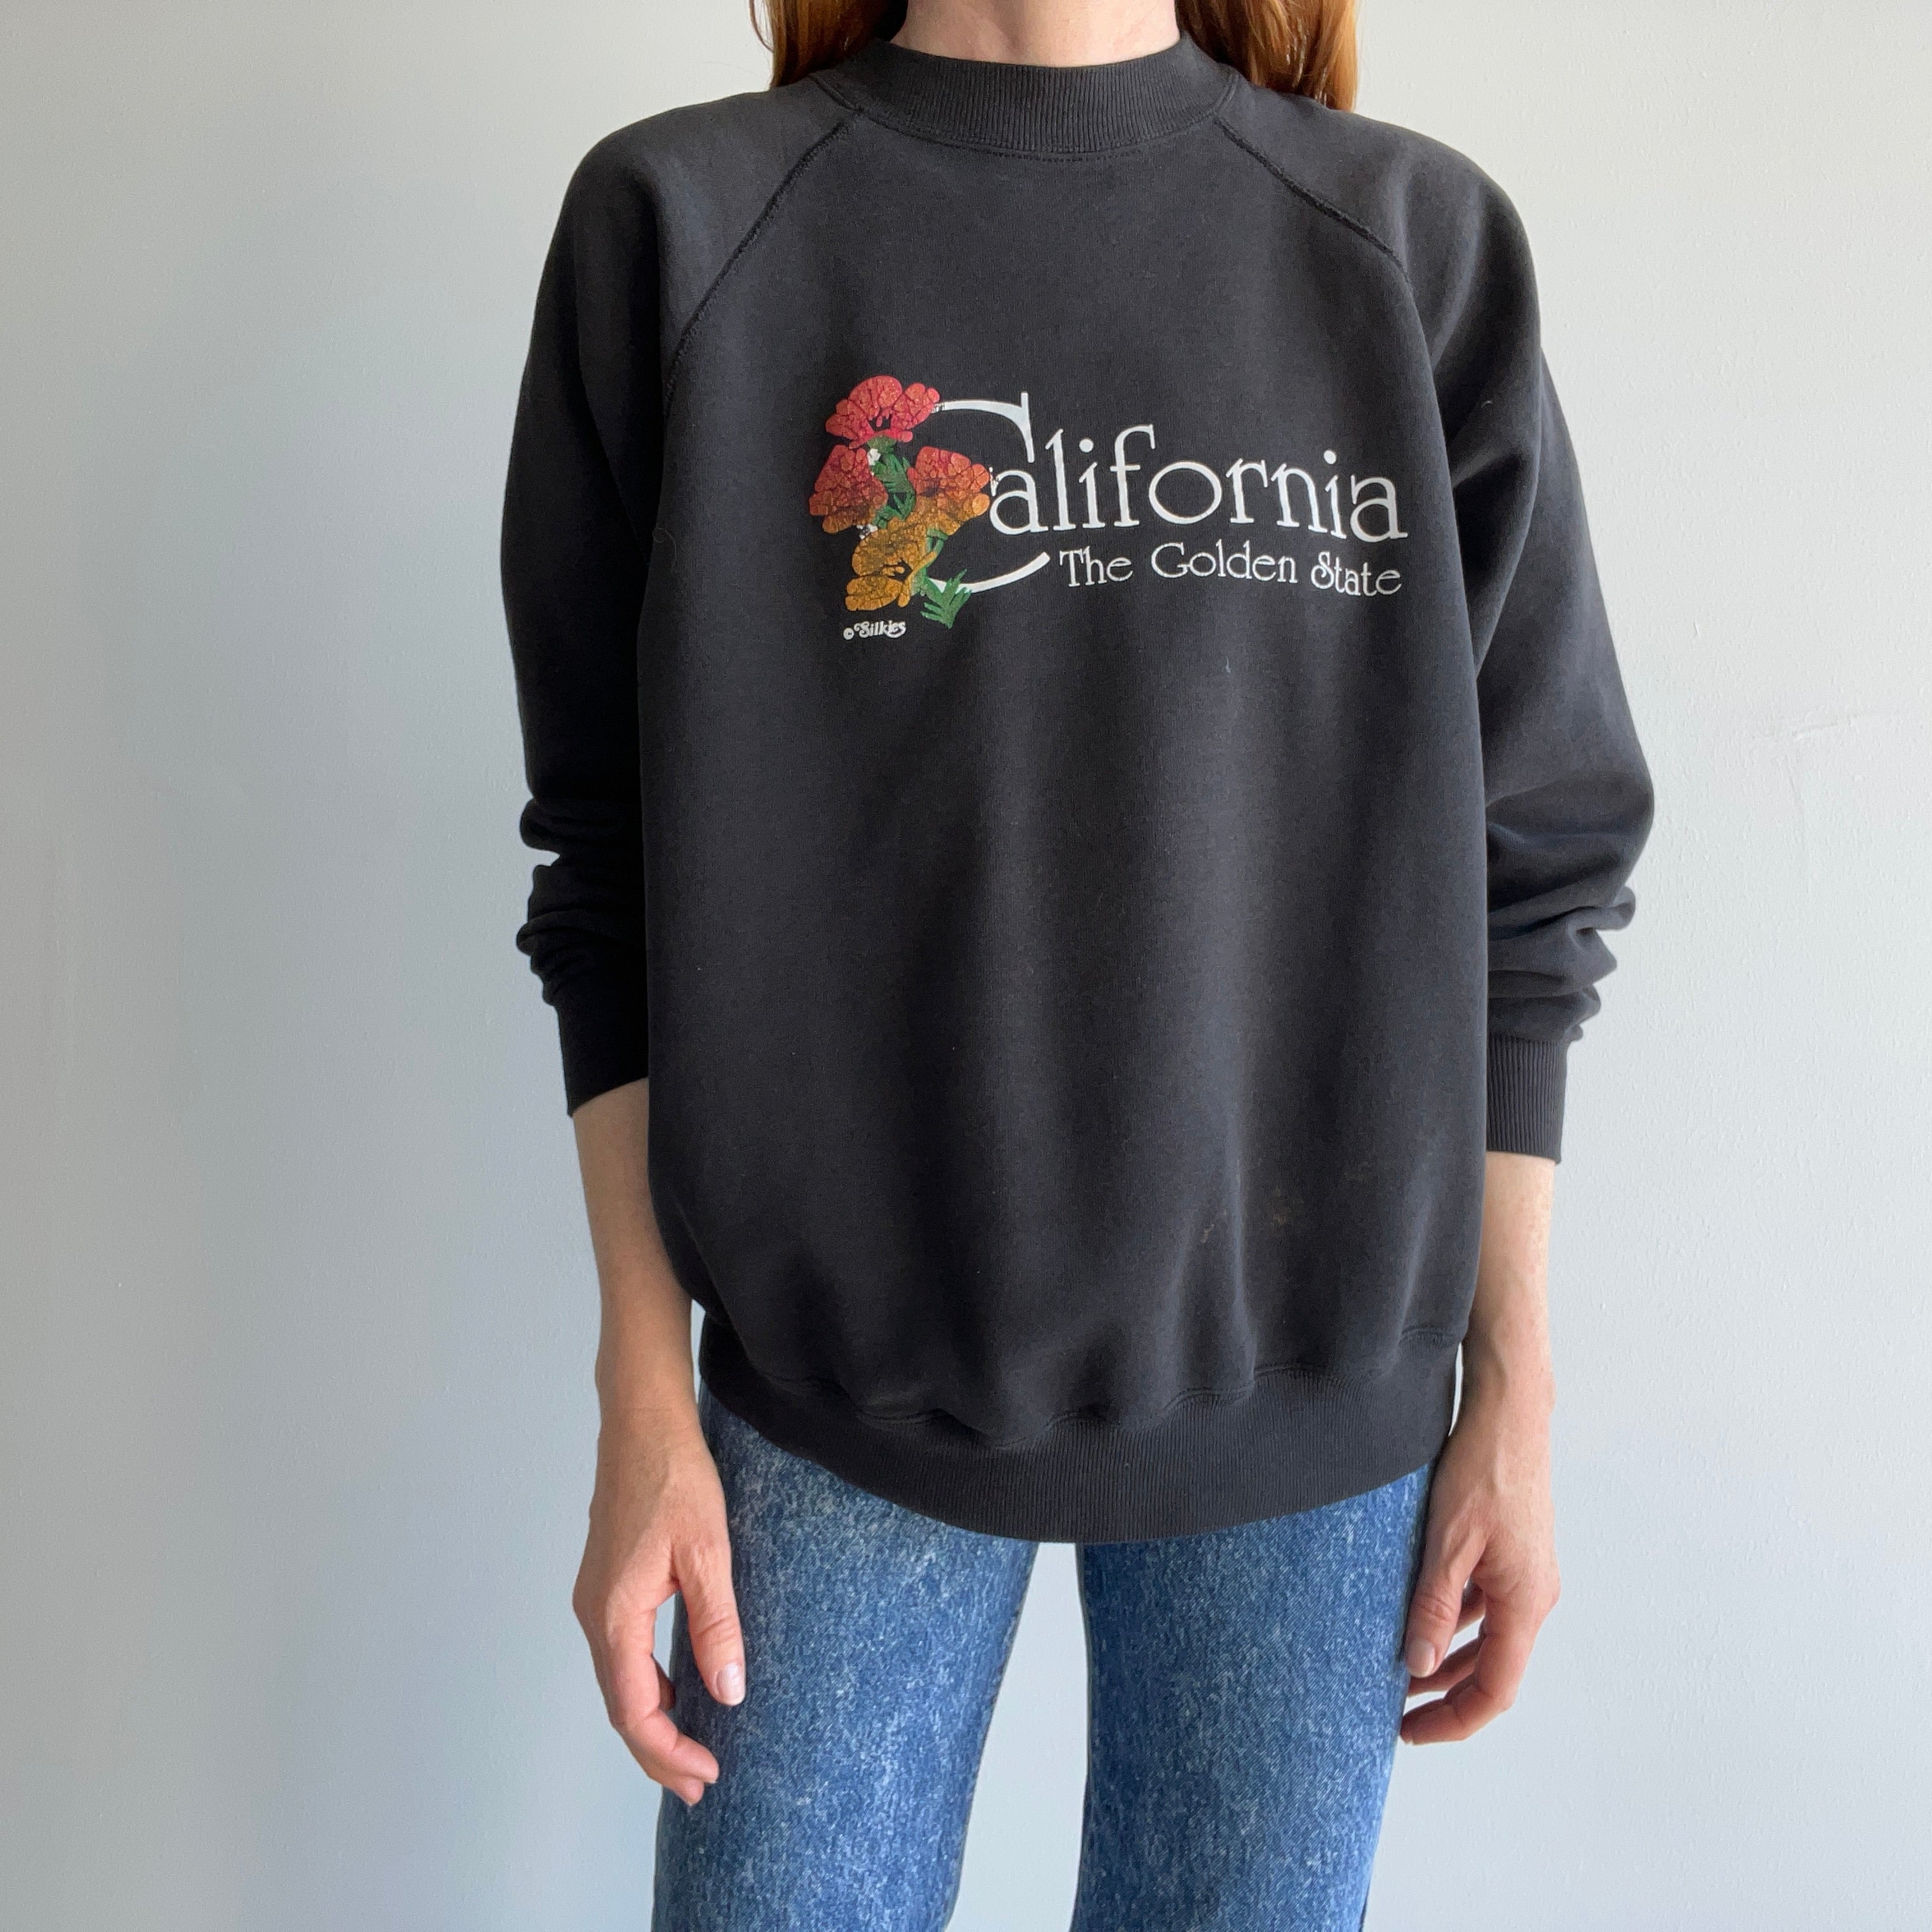 1980/90s California - The Golden State - Sweatshirt